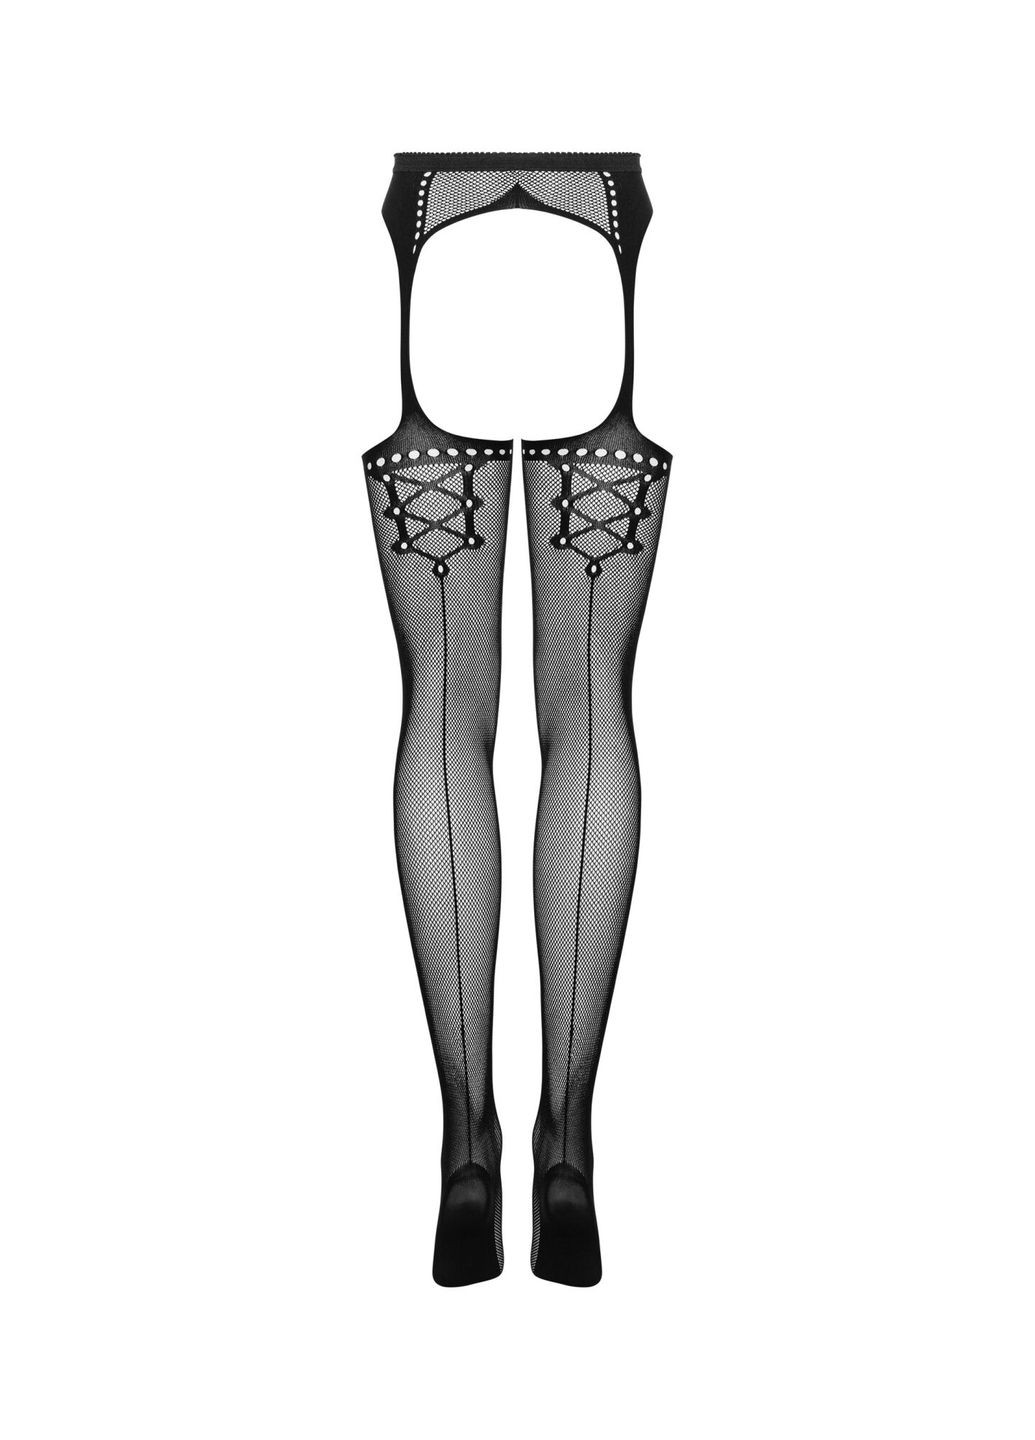 Сітчасті панчохи-стокінги зі стрілкою Garter stockings S314 чорні - CherryLove Obsessive (282958951)